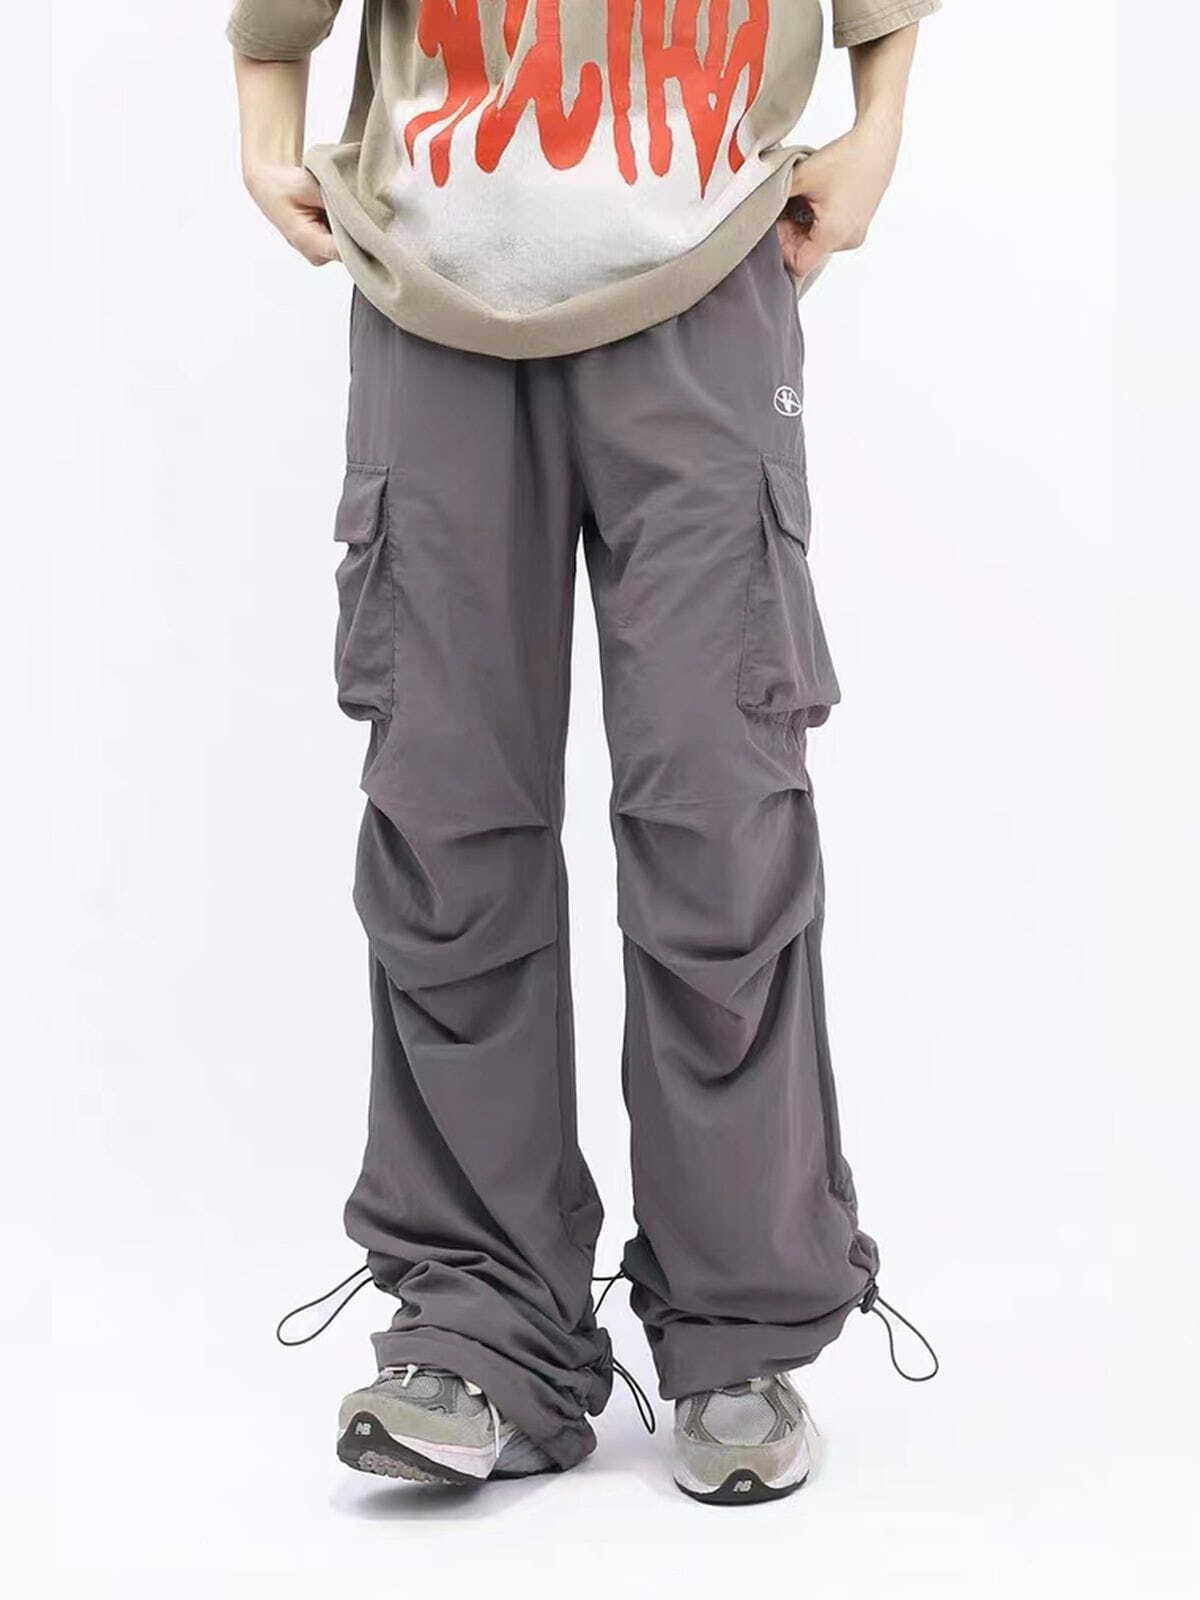 embroidered cargo pants sleek wrinkle design urban chic 2386